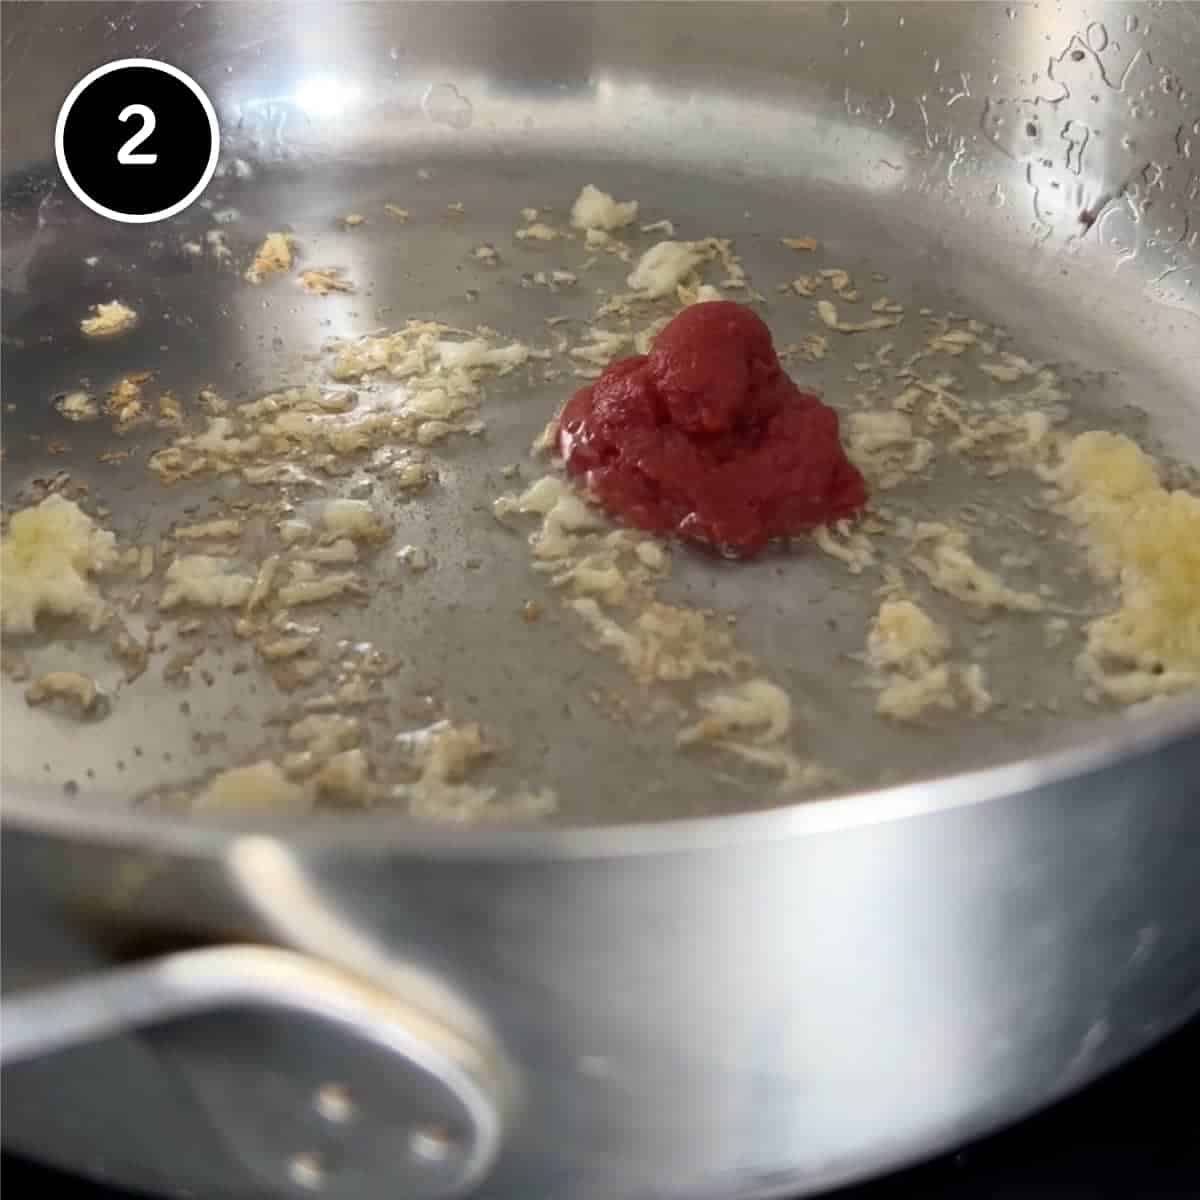 Adding tomato to a pan of frying garlic